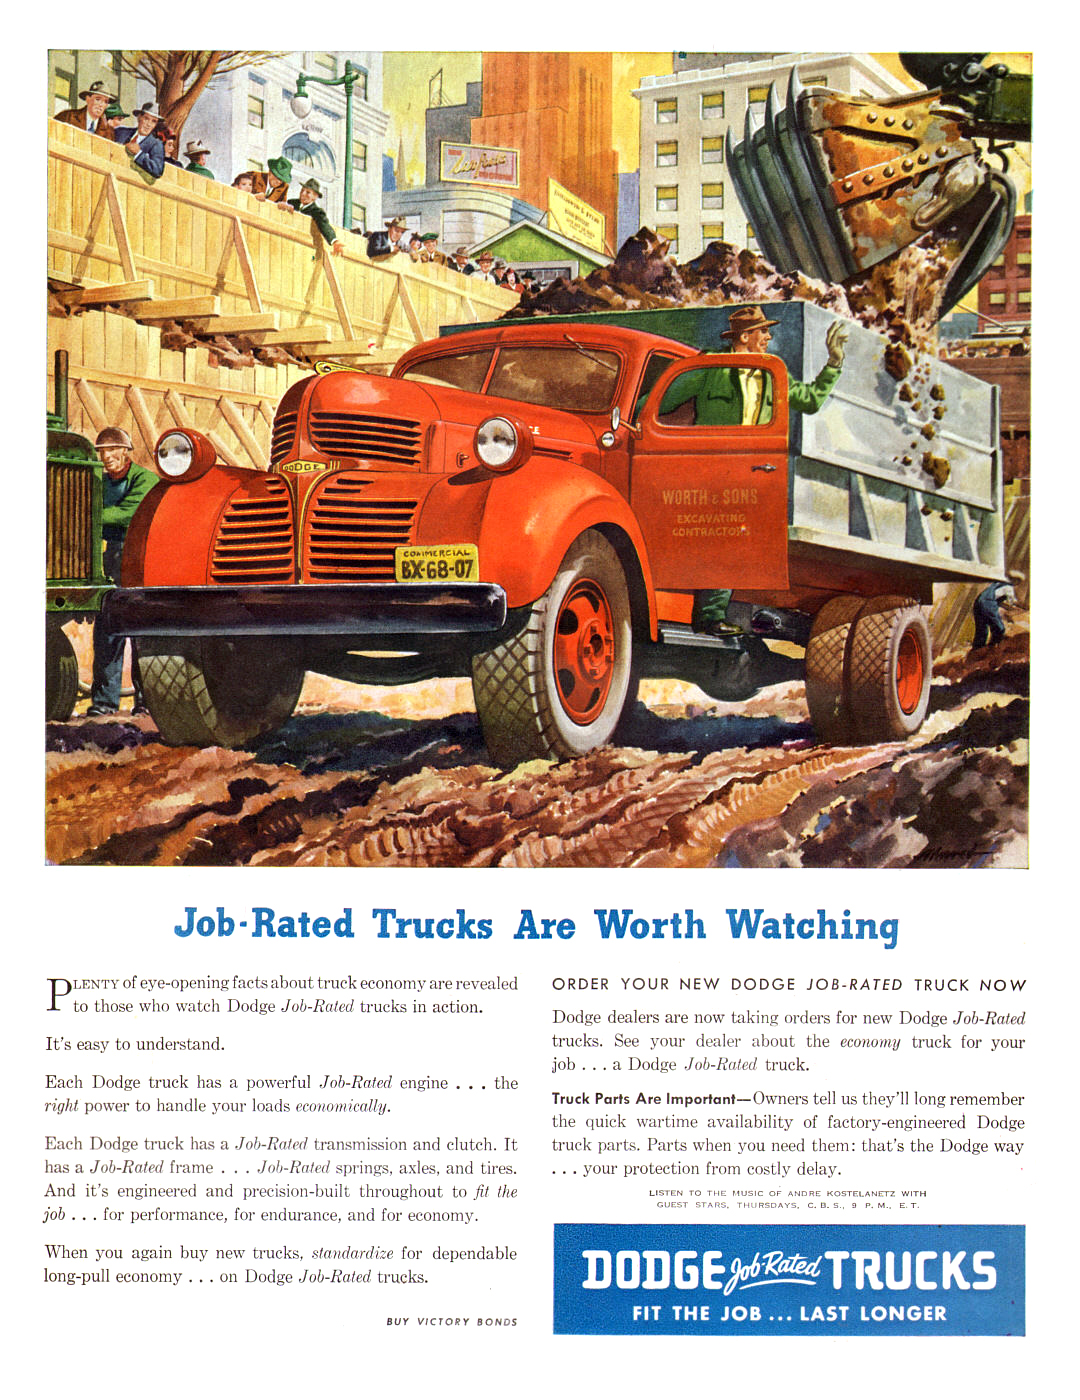 Dodge Trucks Ad (November, 1945): Job-Rated Trucks Are Worth Watching